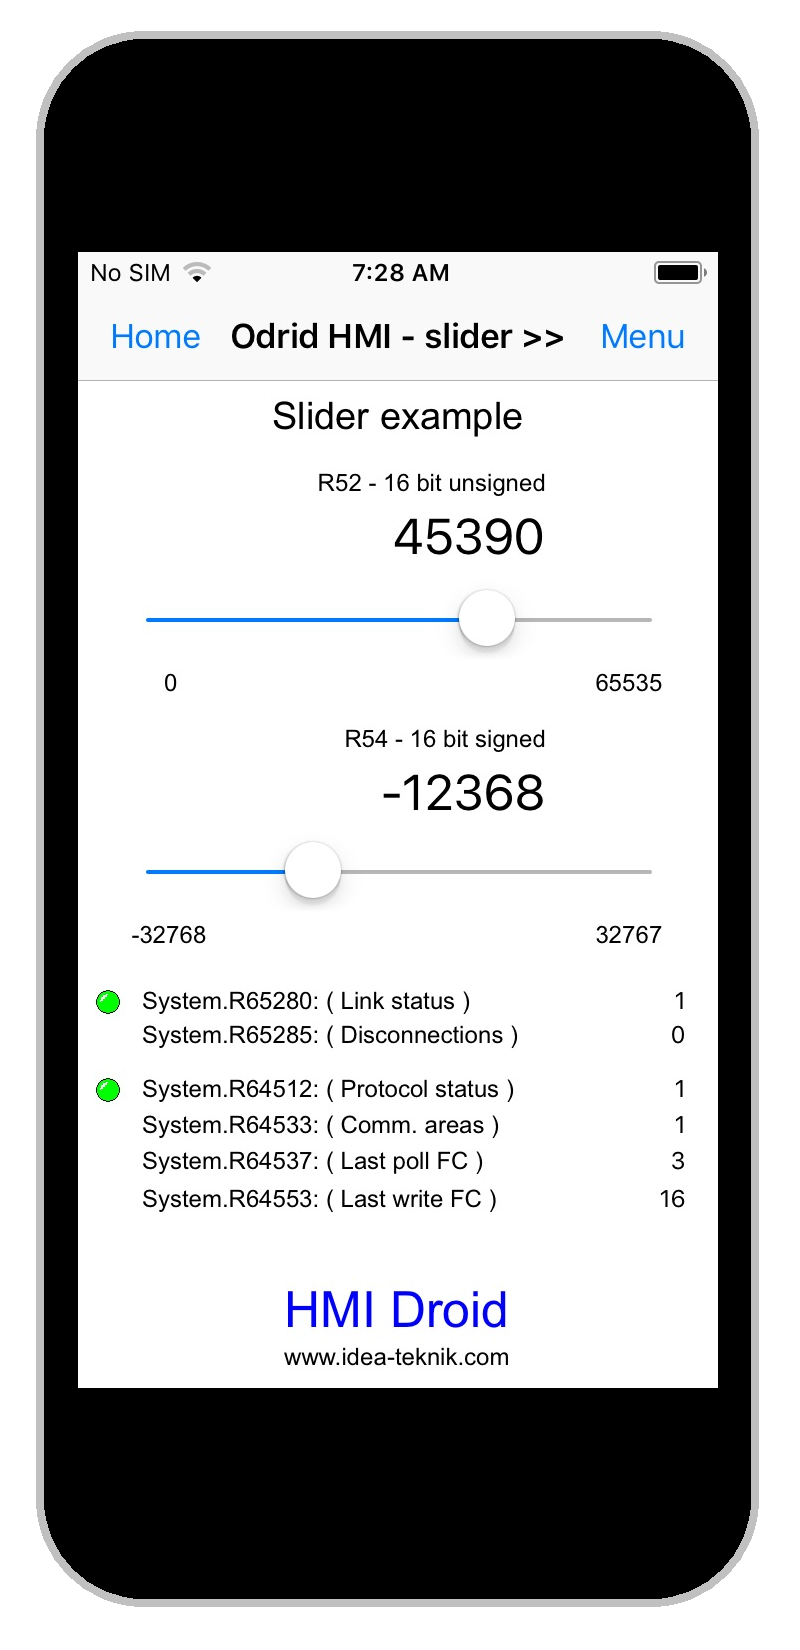 HMI Droid for iOS - Slider example